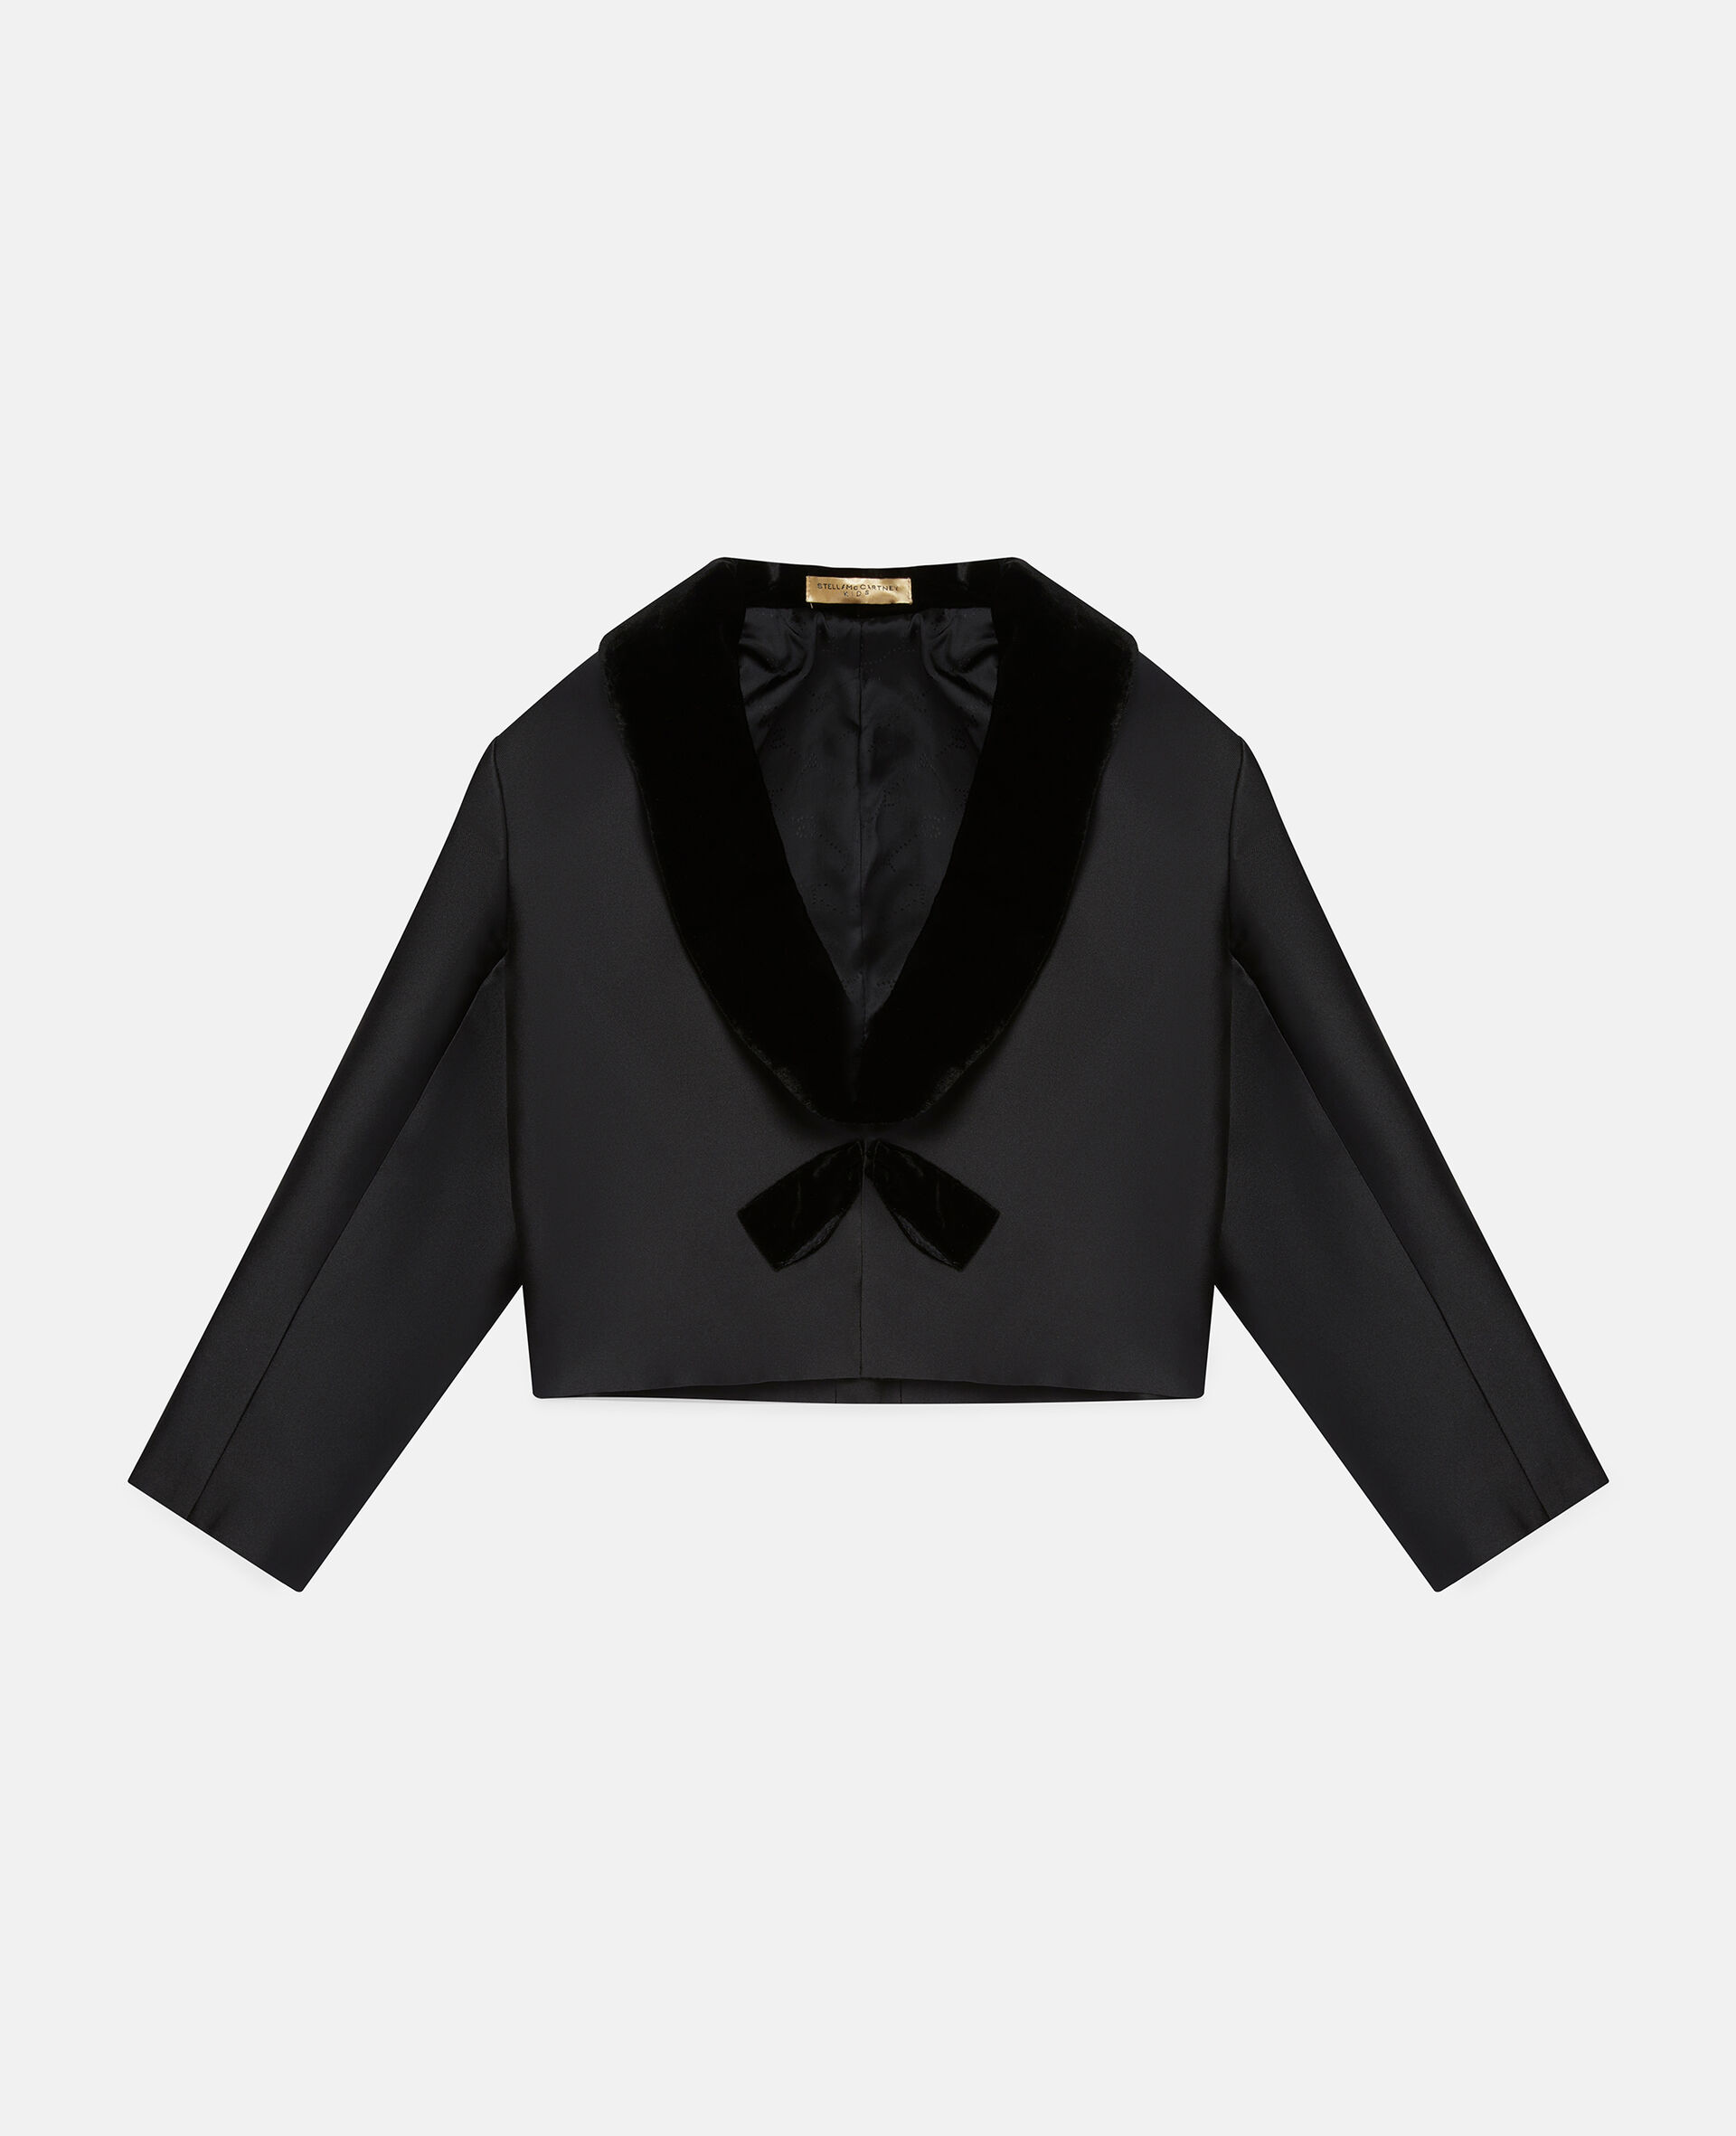 Bow Suit Jacket-Black-large image number 0